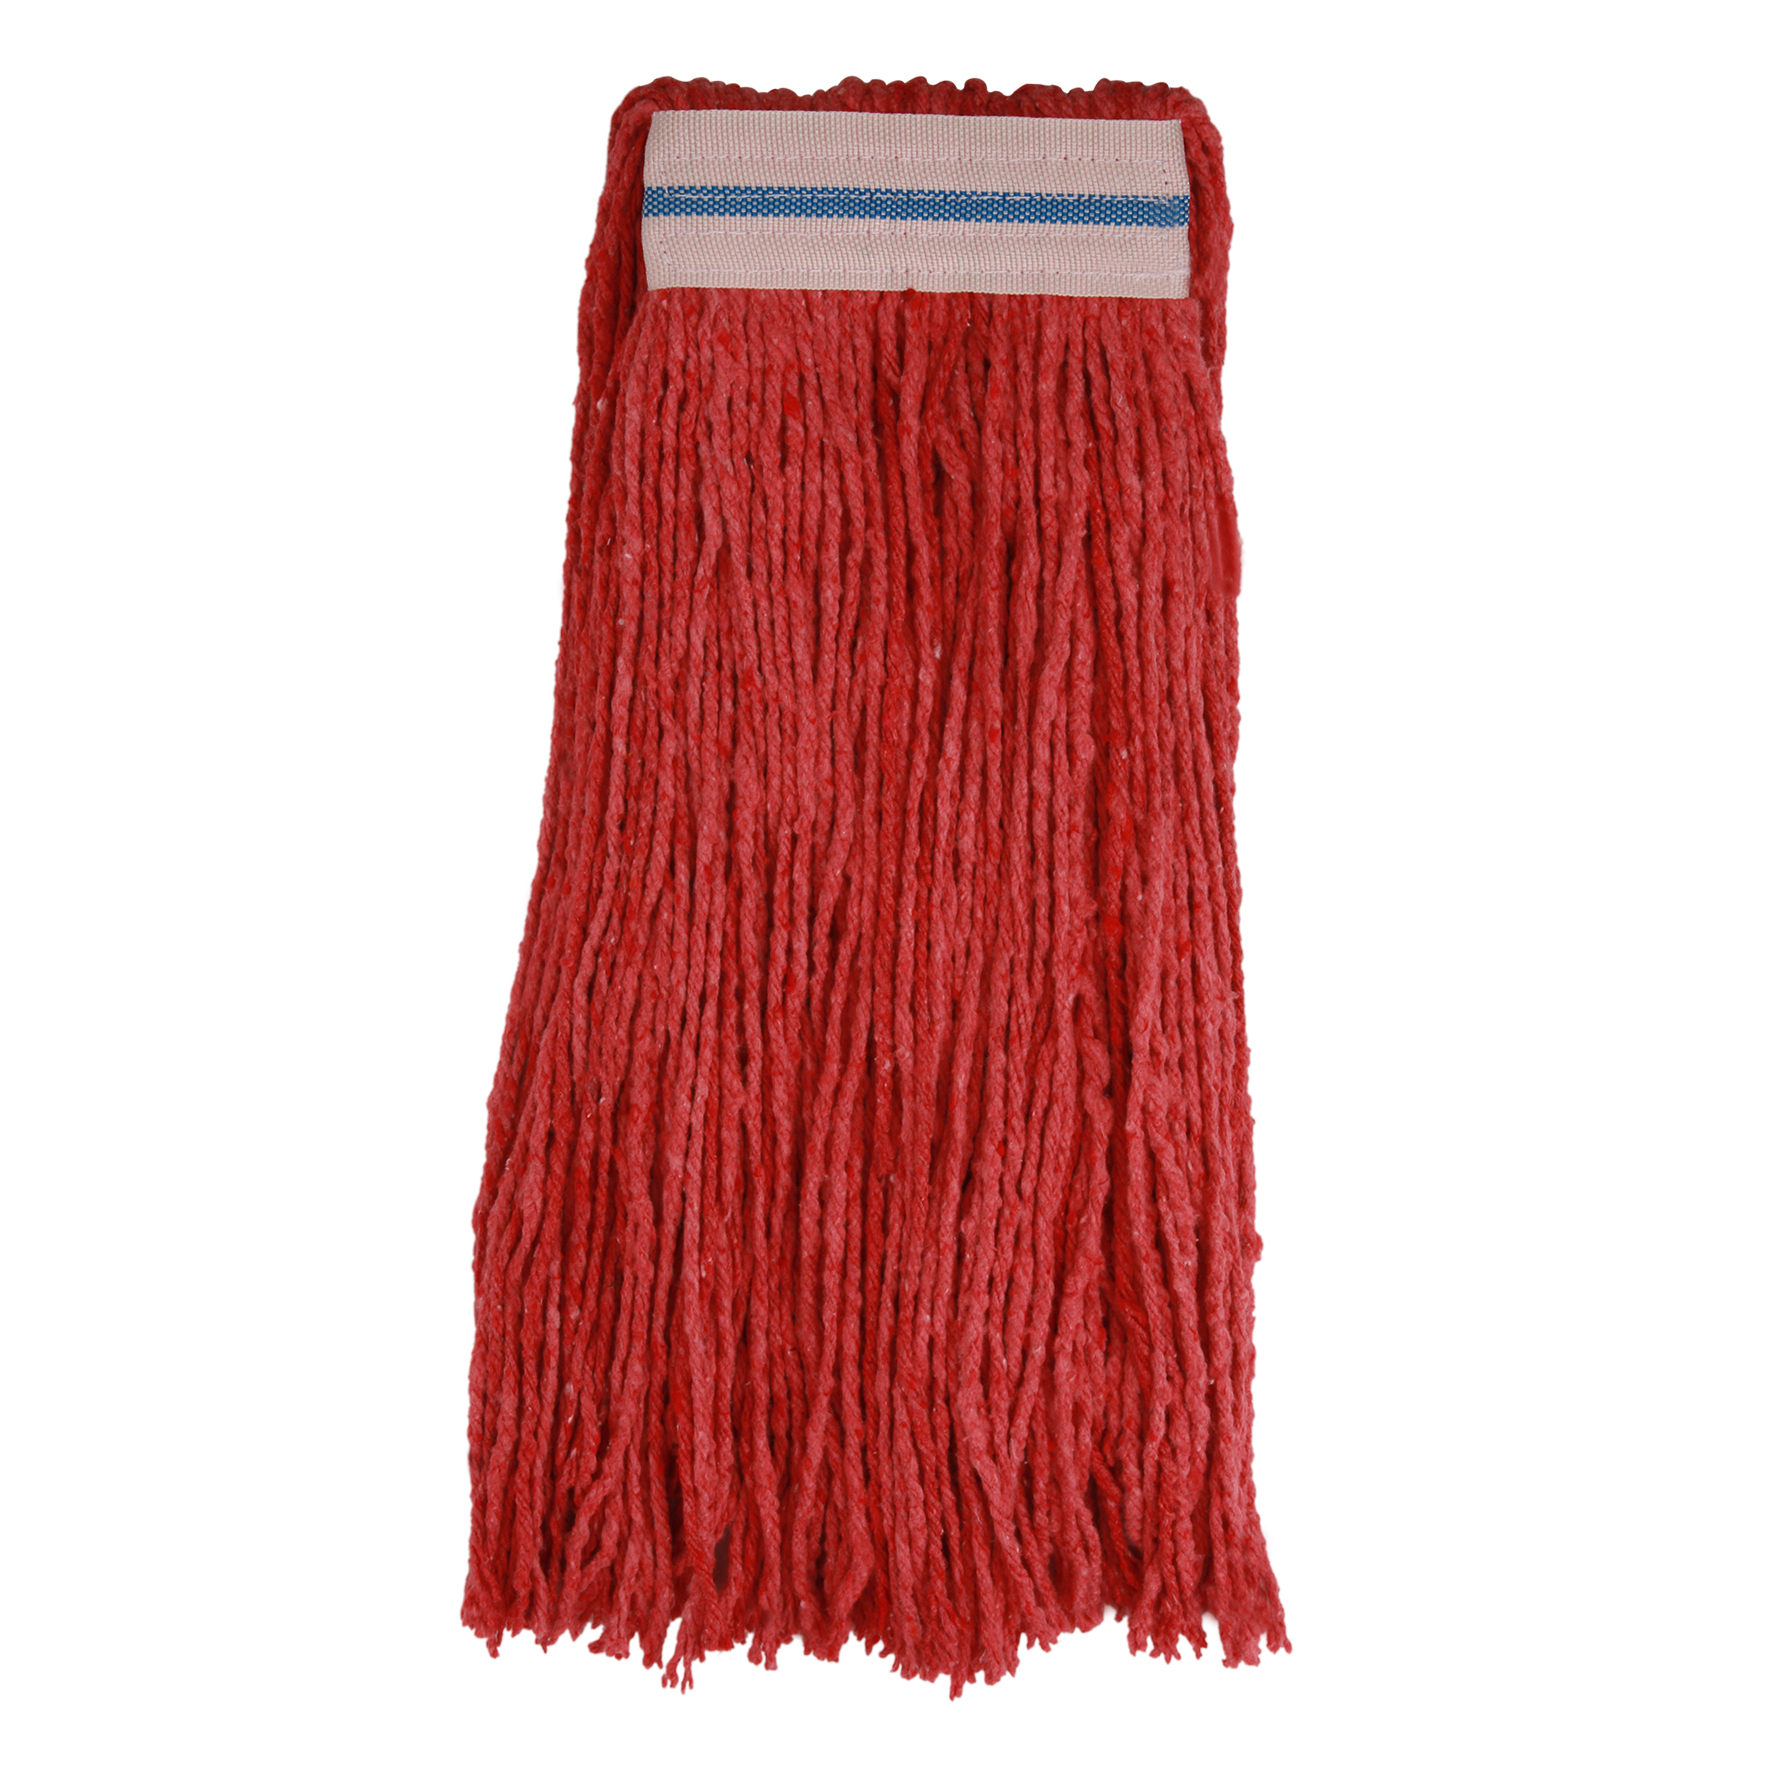 Professional cotton yarn mop 360 gr